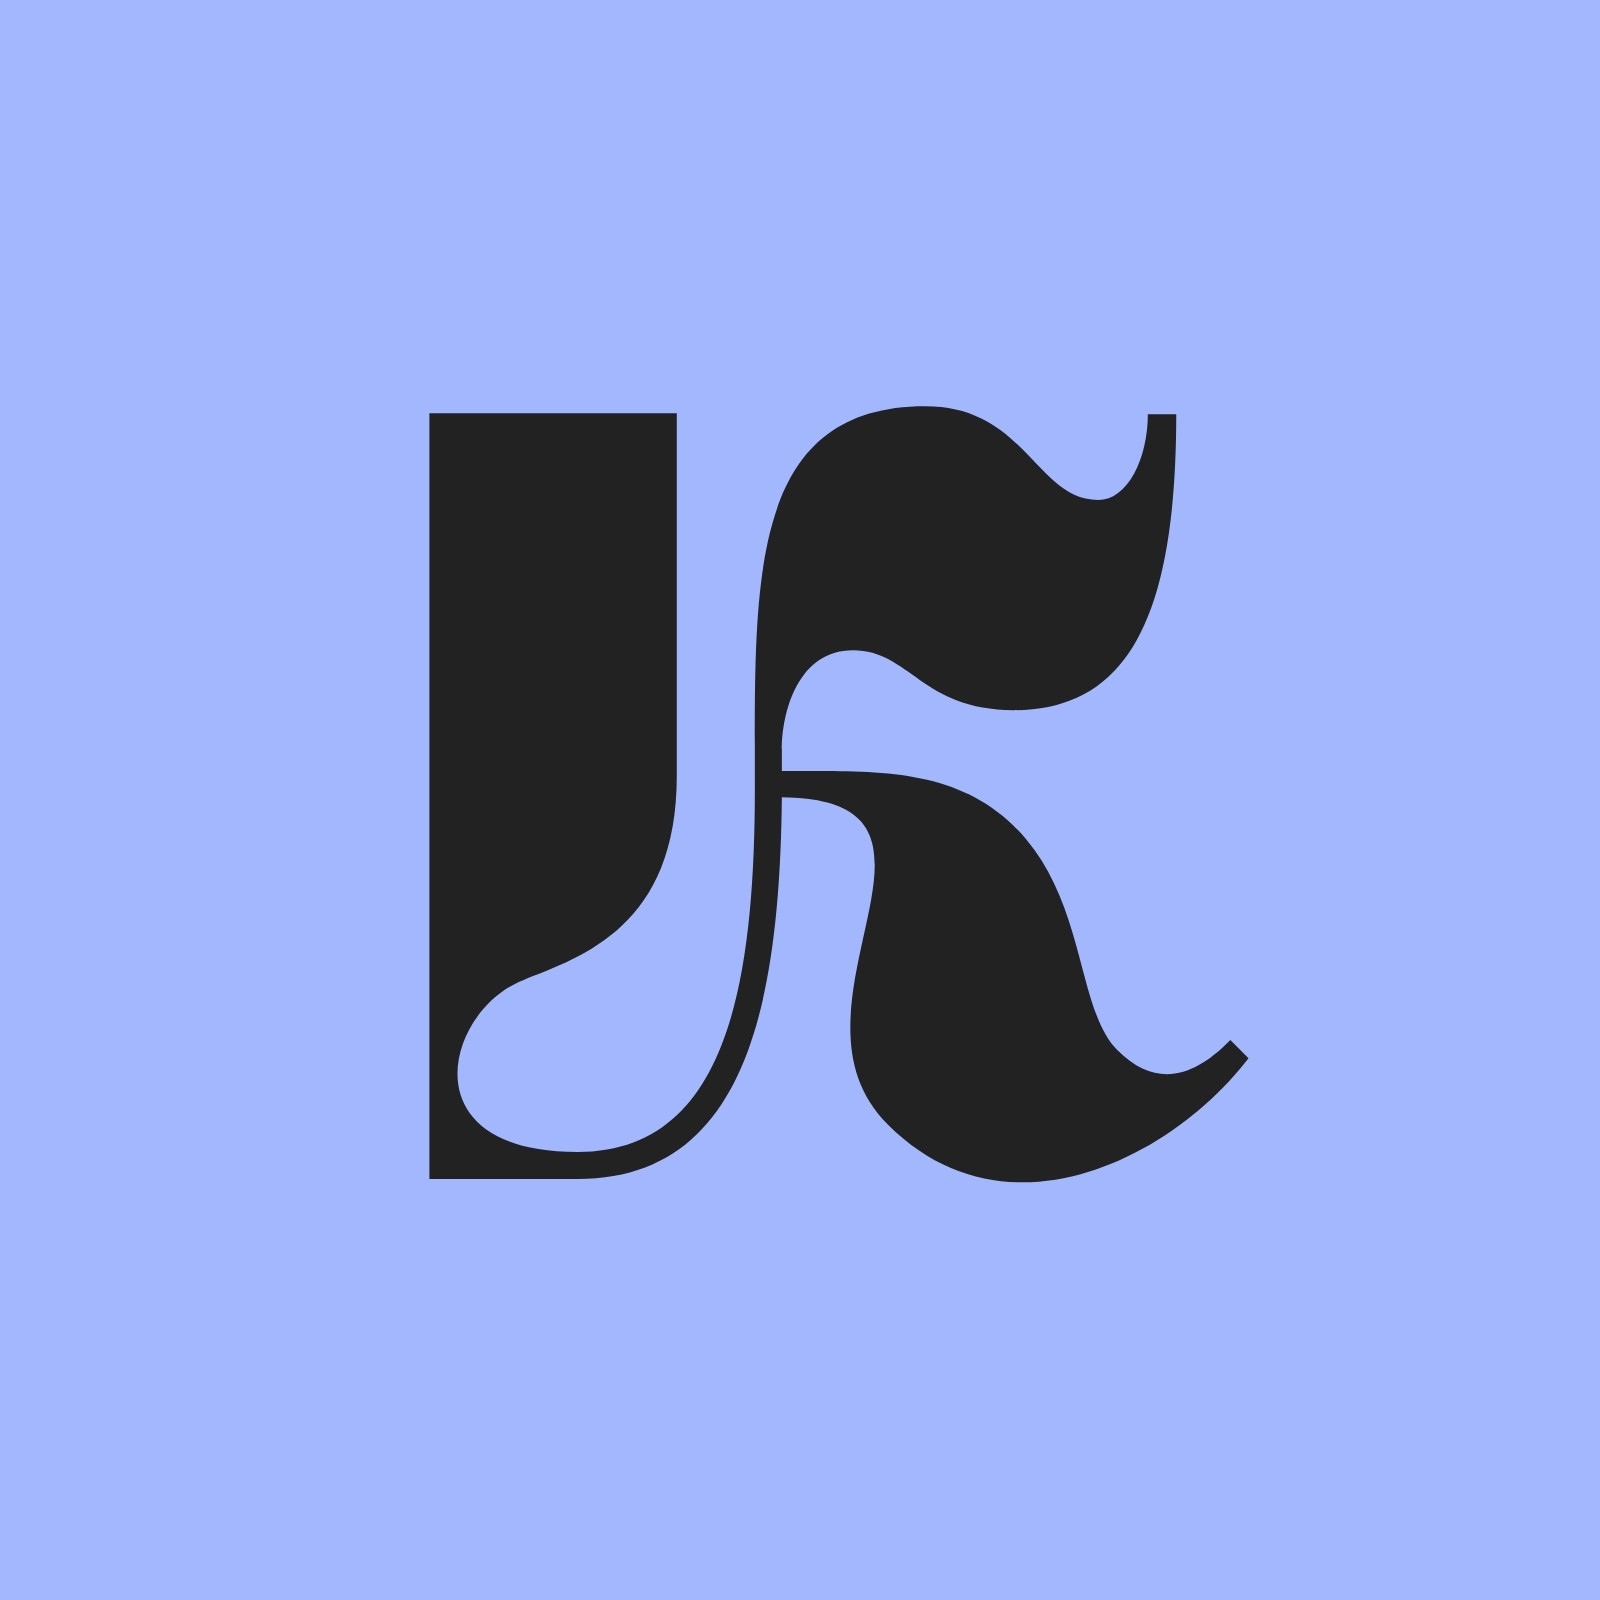 Free to use and customize monogram logo templates